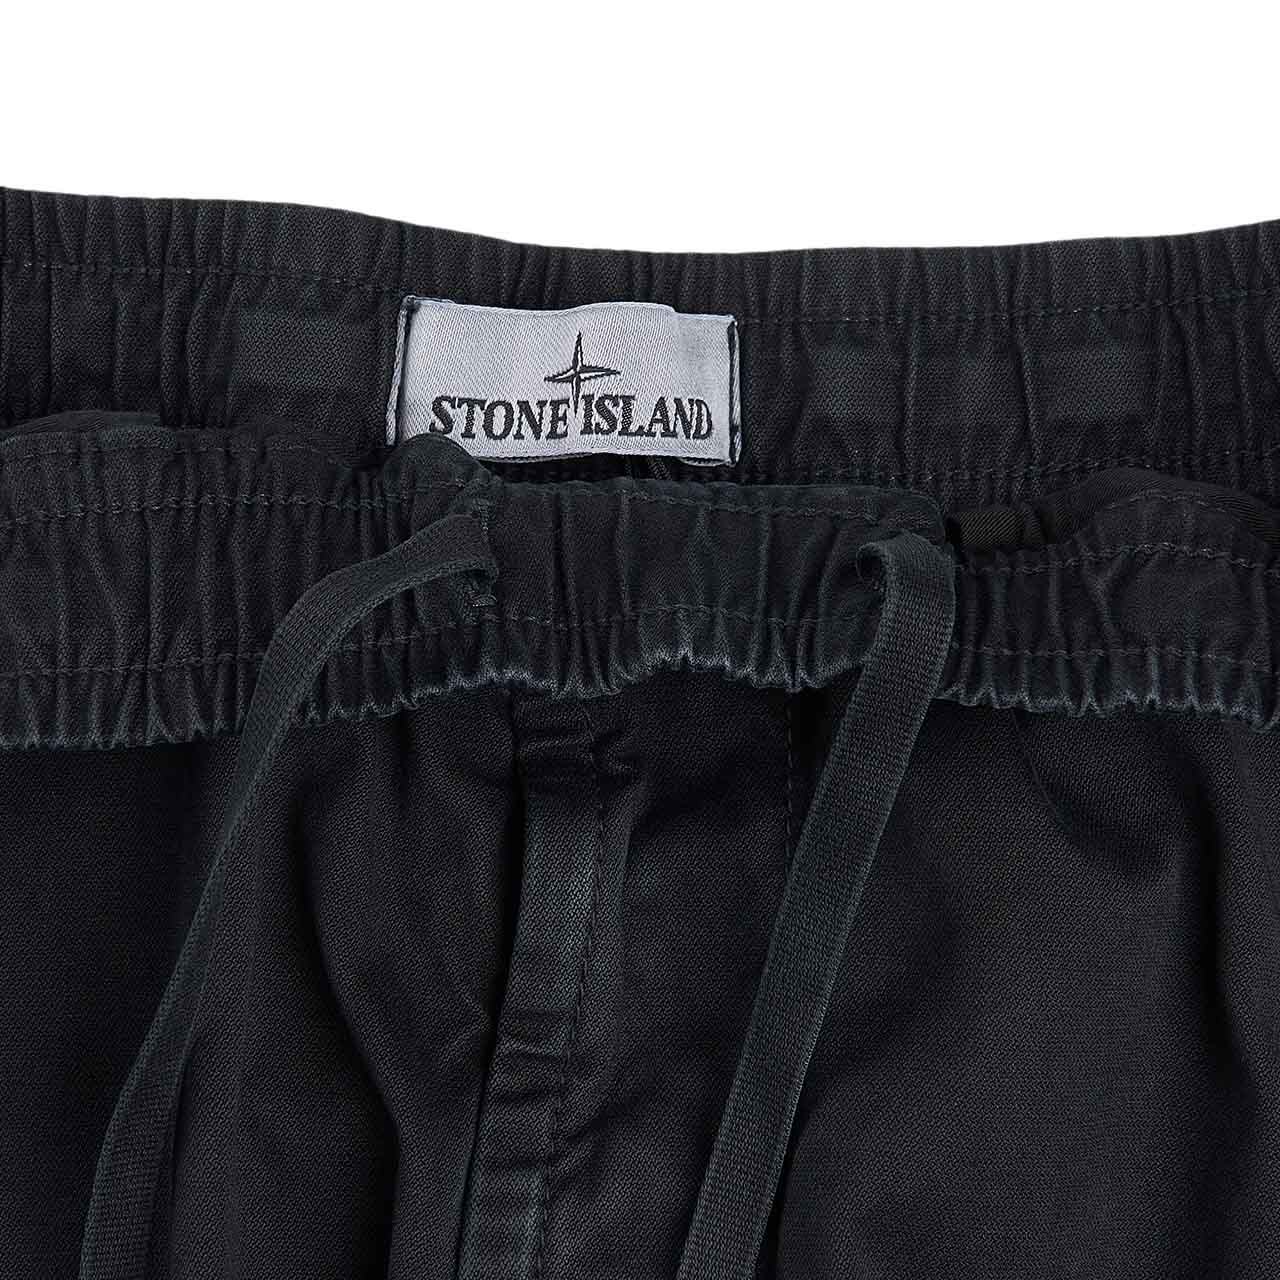 stone island regular tapered pants (black)